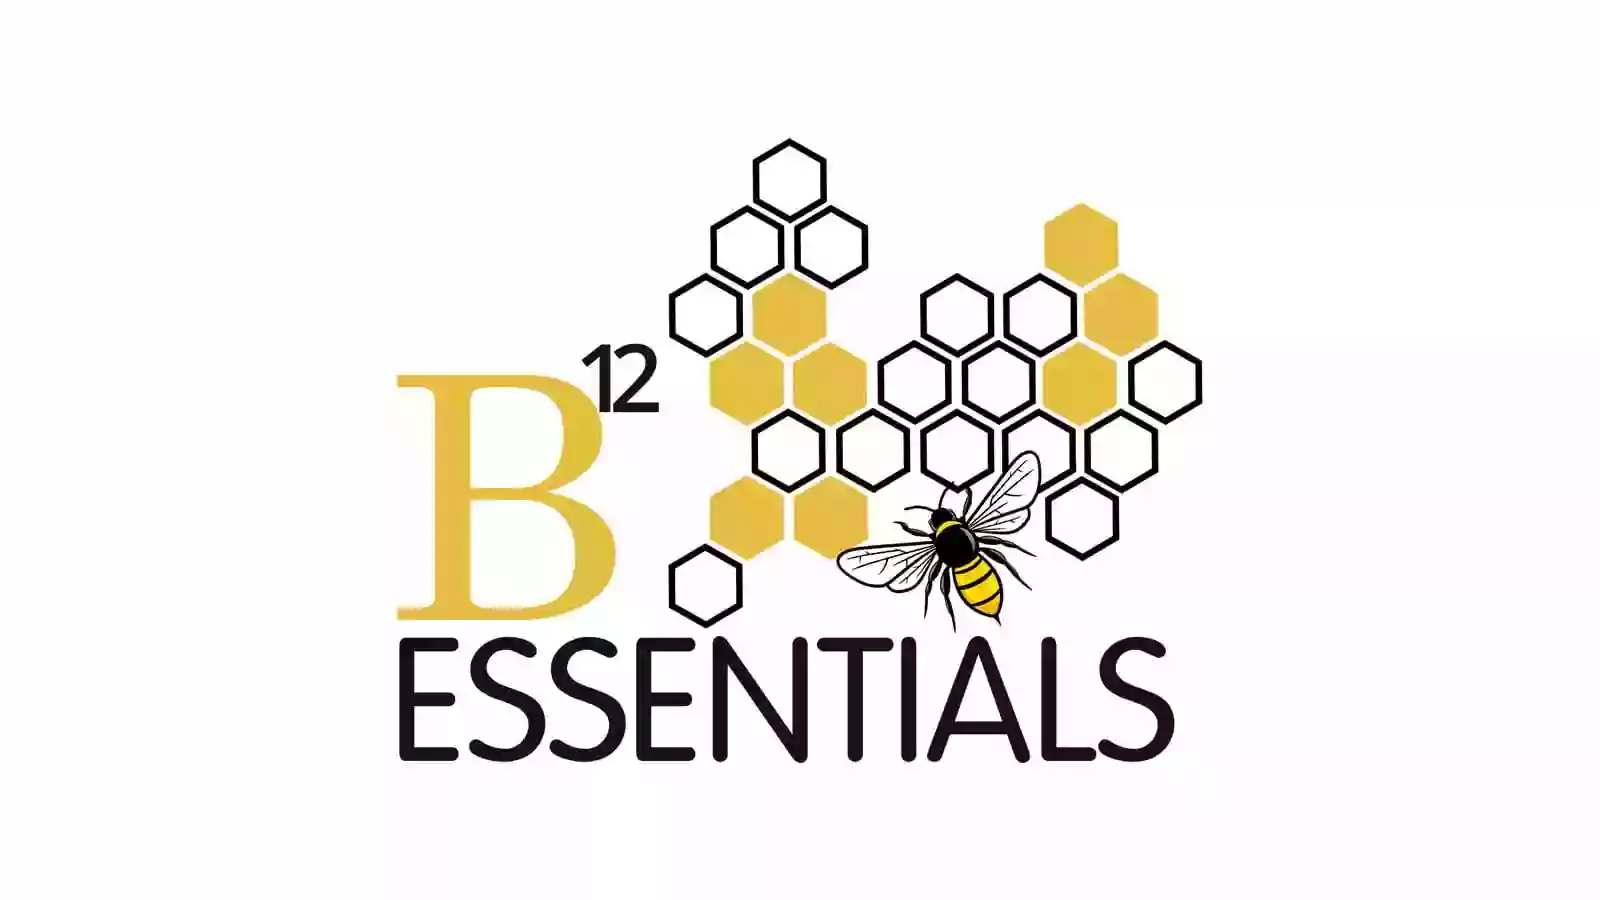 B12 Essentials